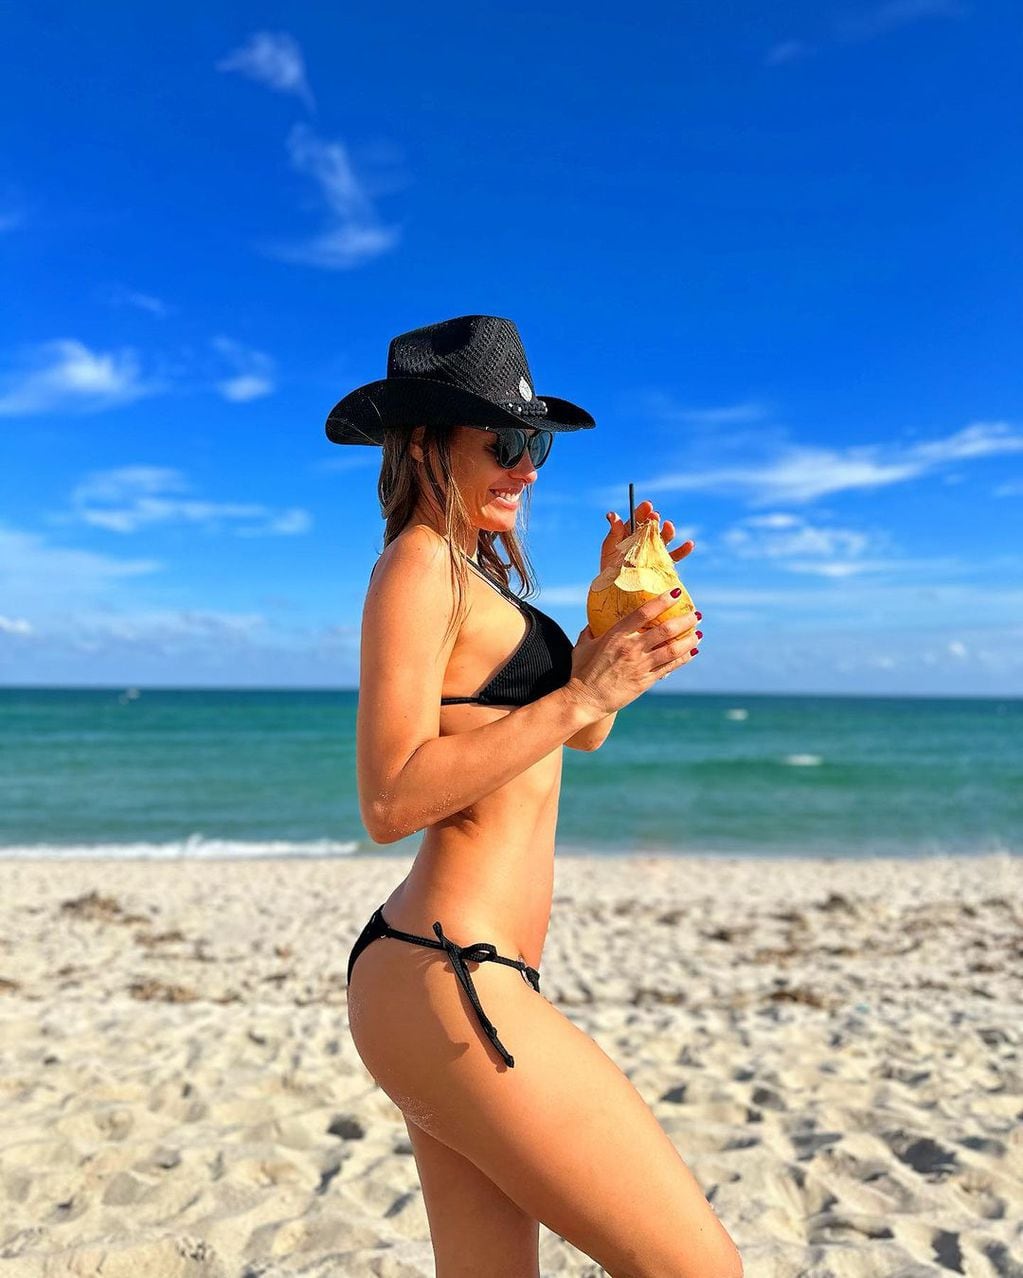 Pampita deslumbro con una microbikini negra en las playas de Miami